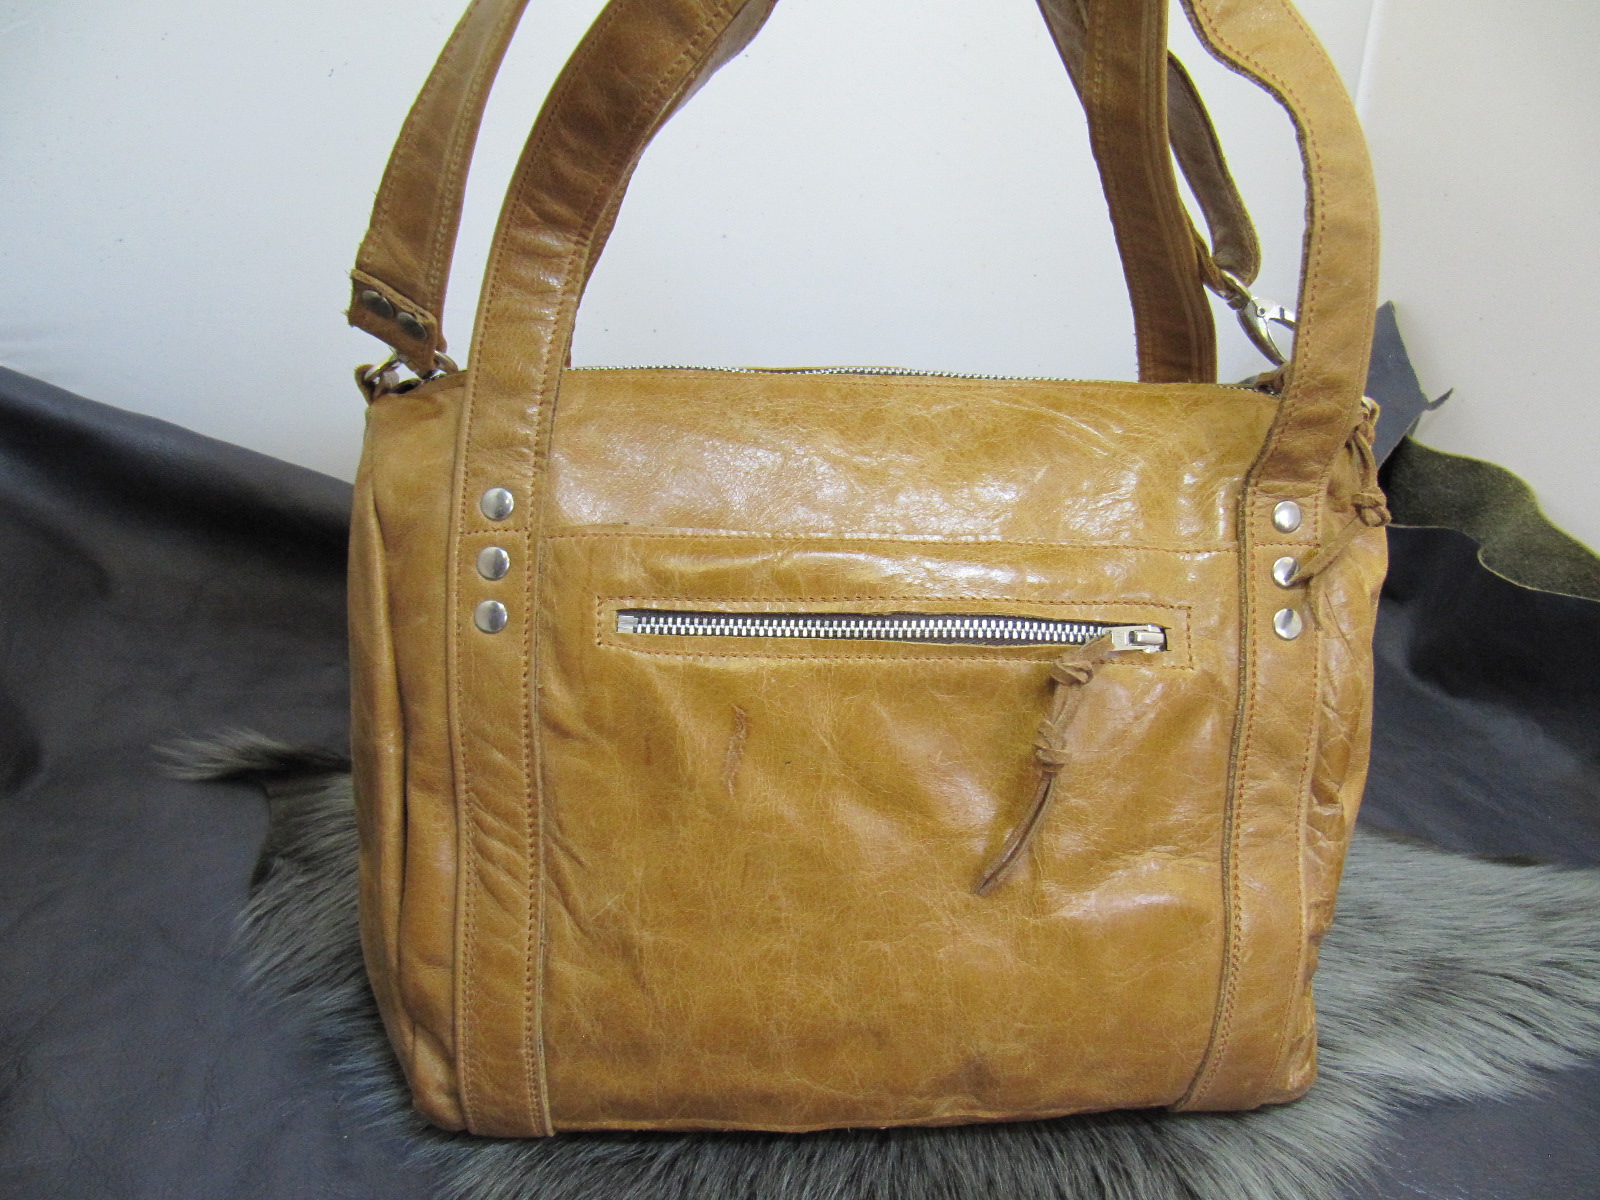 Tan leather Bowling style handbag